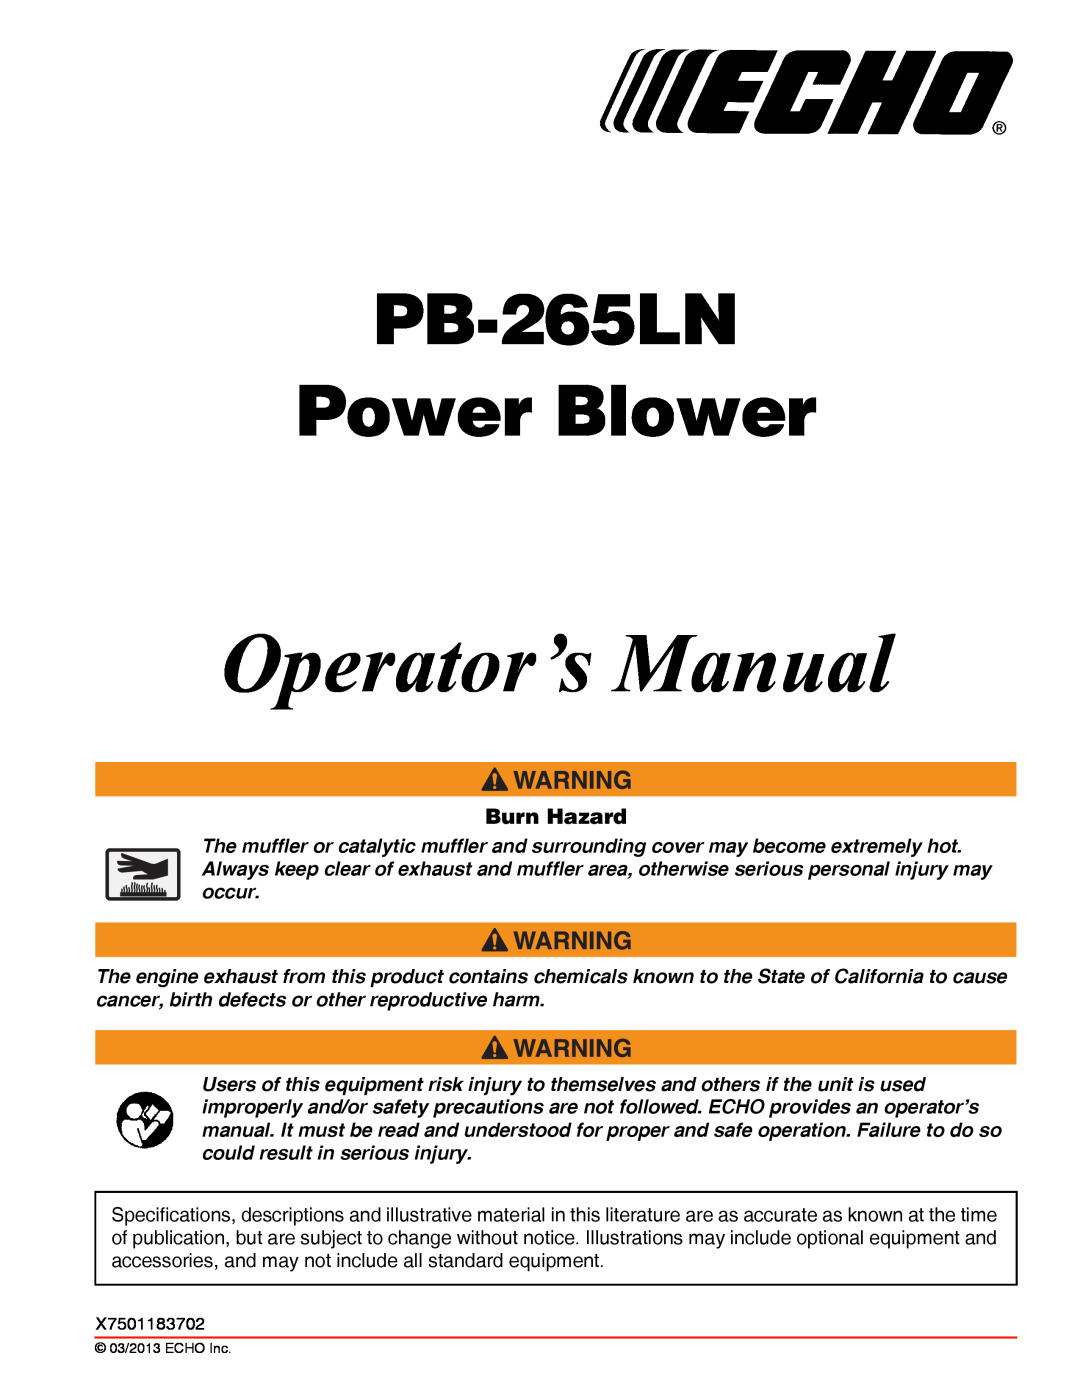 Echo specifications Burn Hazard, Operator’s Manual, PB-265LN Power Blower 